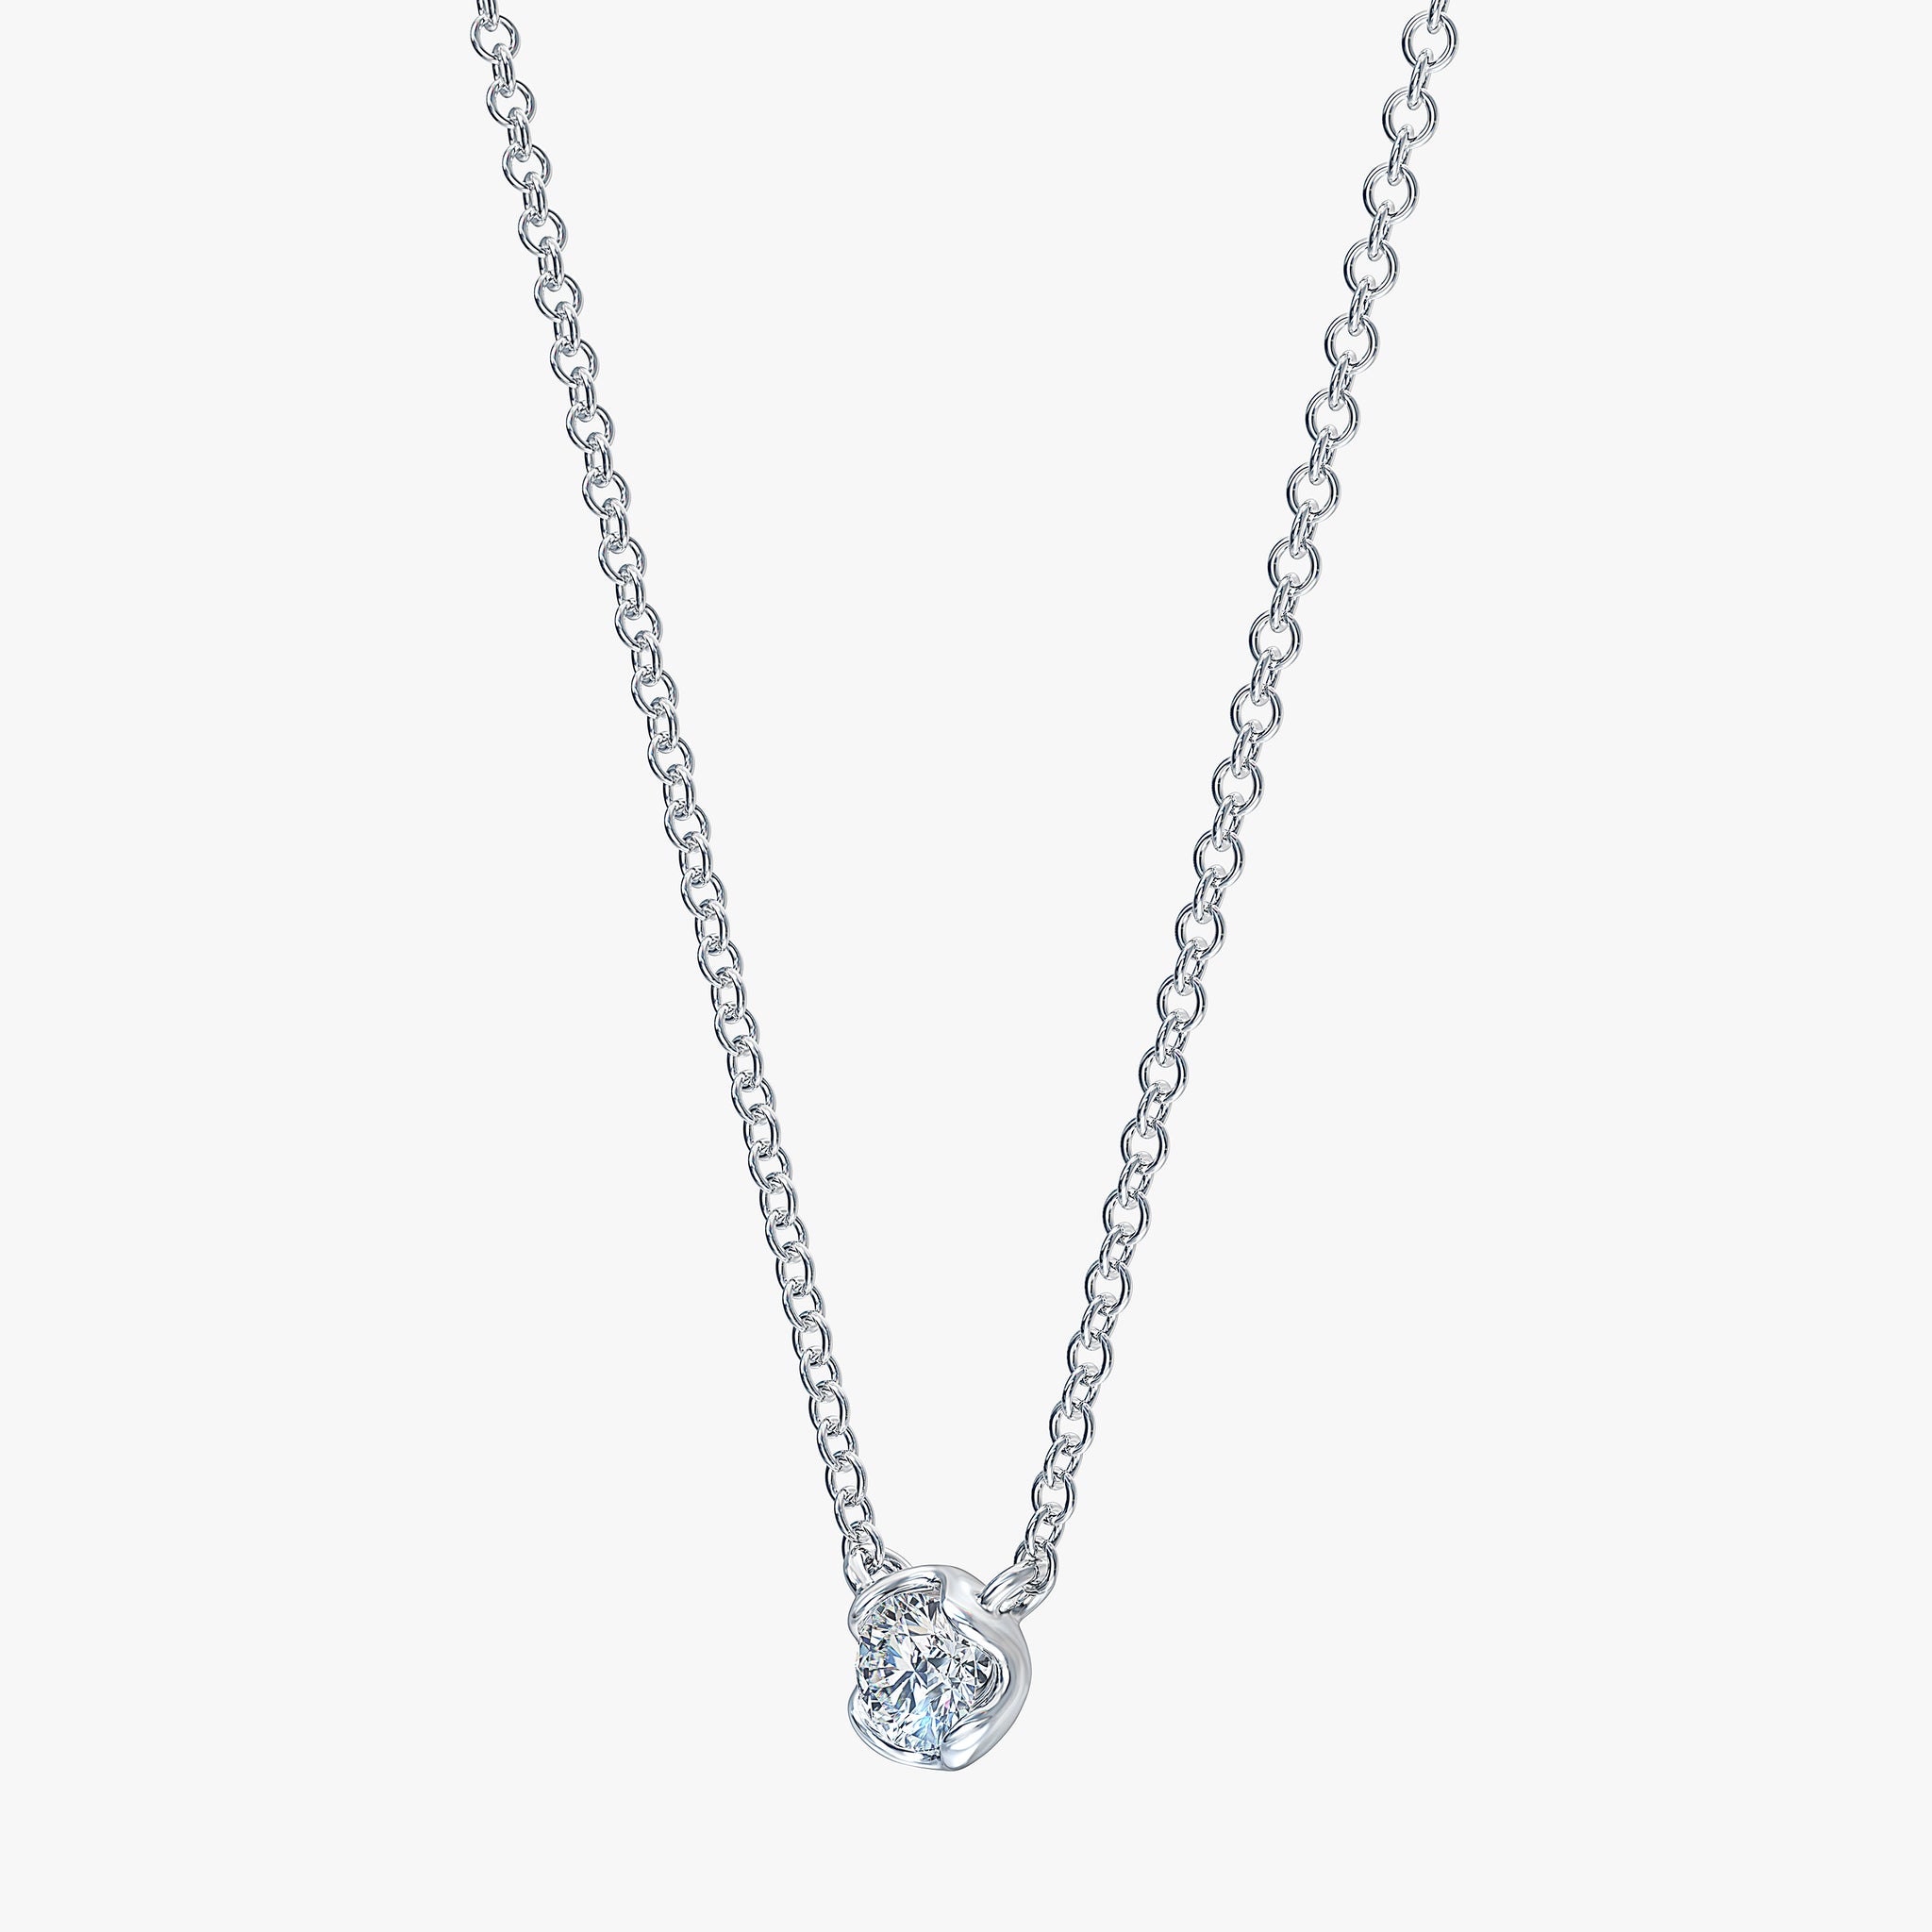 J'EVAR 14KT White Gold Solitaire ALTR Lab Grown Diamond Necklace Perspective View | 0.10 CT